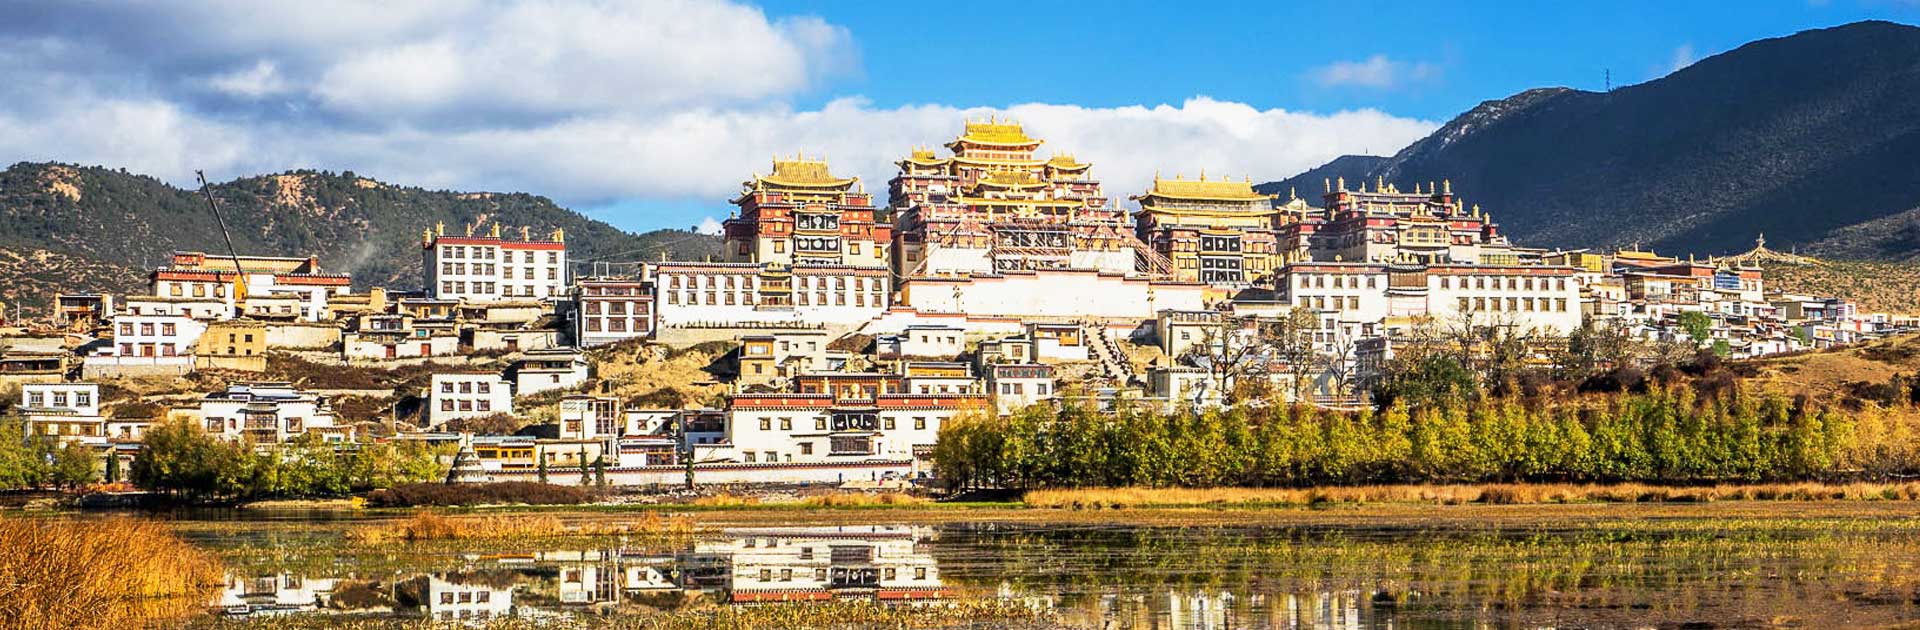 Flights from Shangri-la to Lhasa and Lhasa to Shangri-la